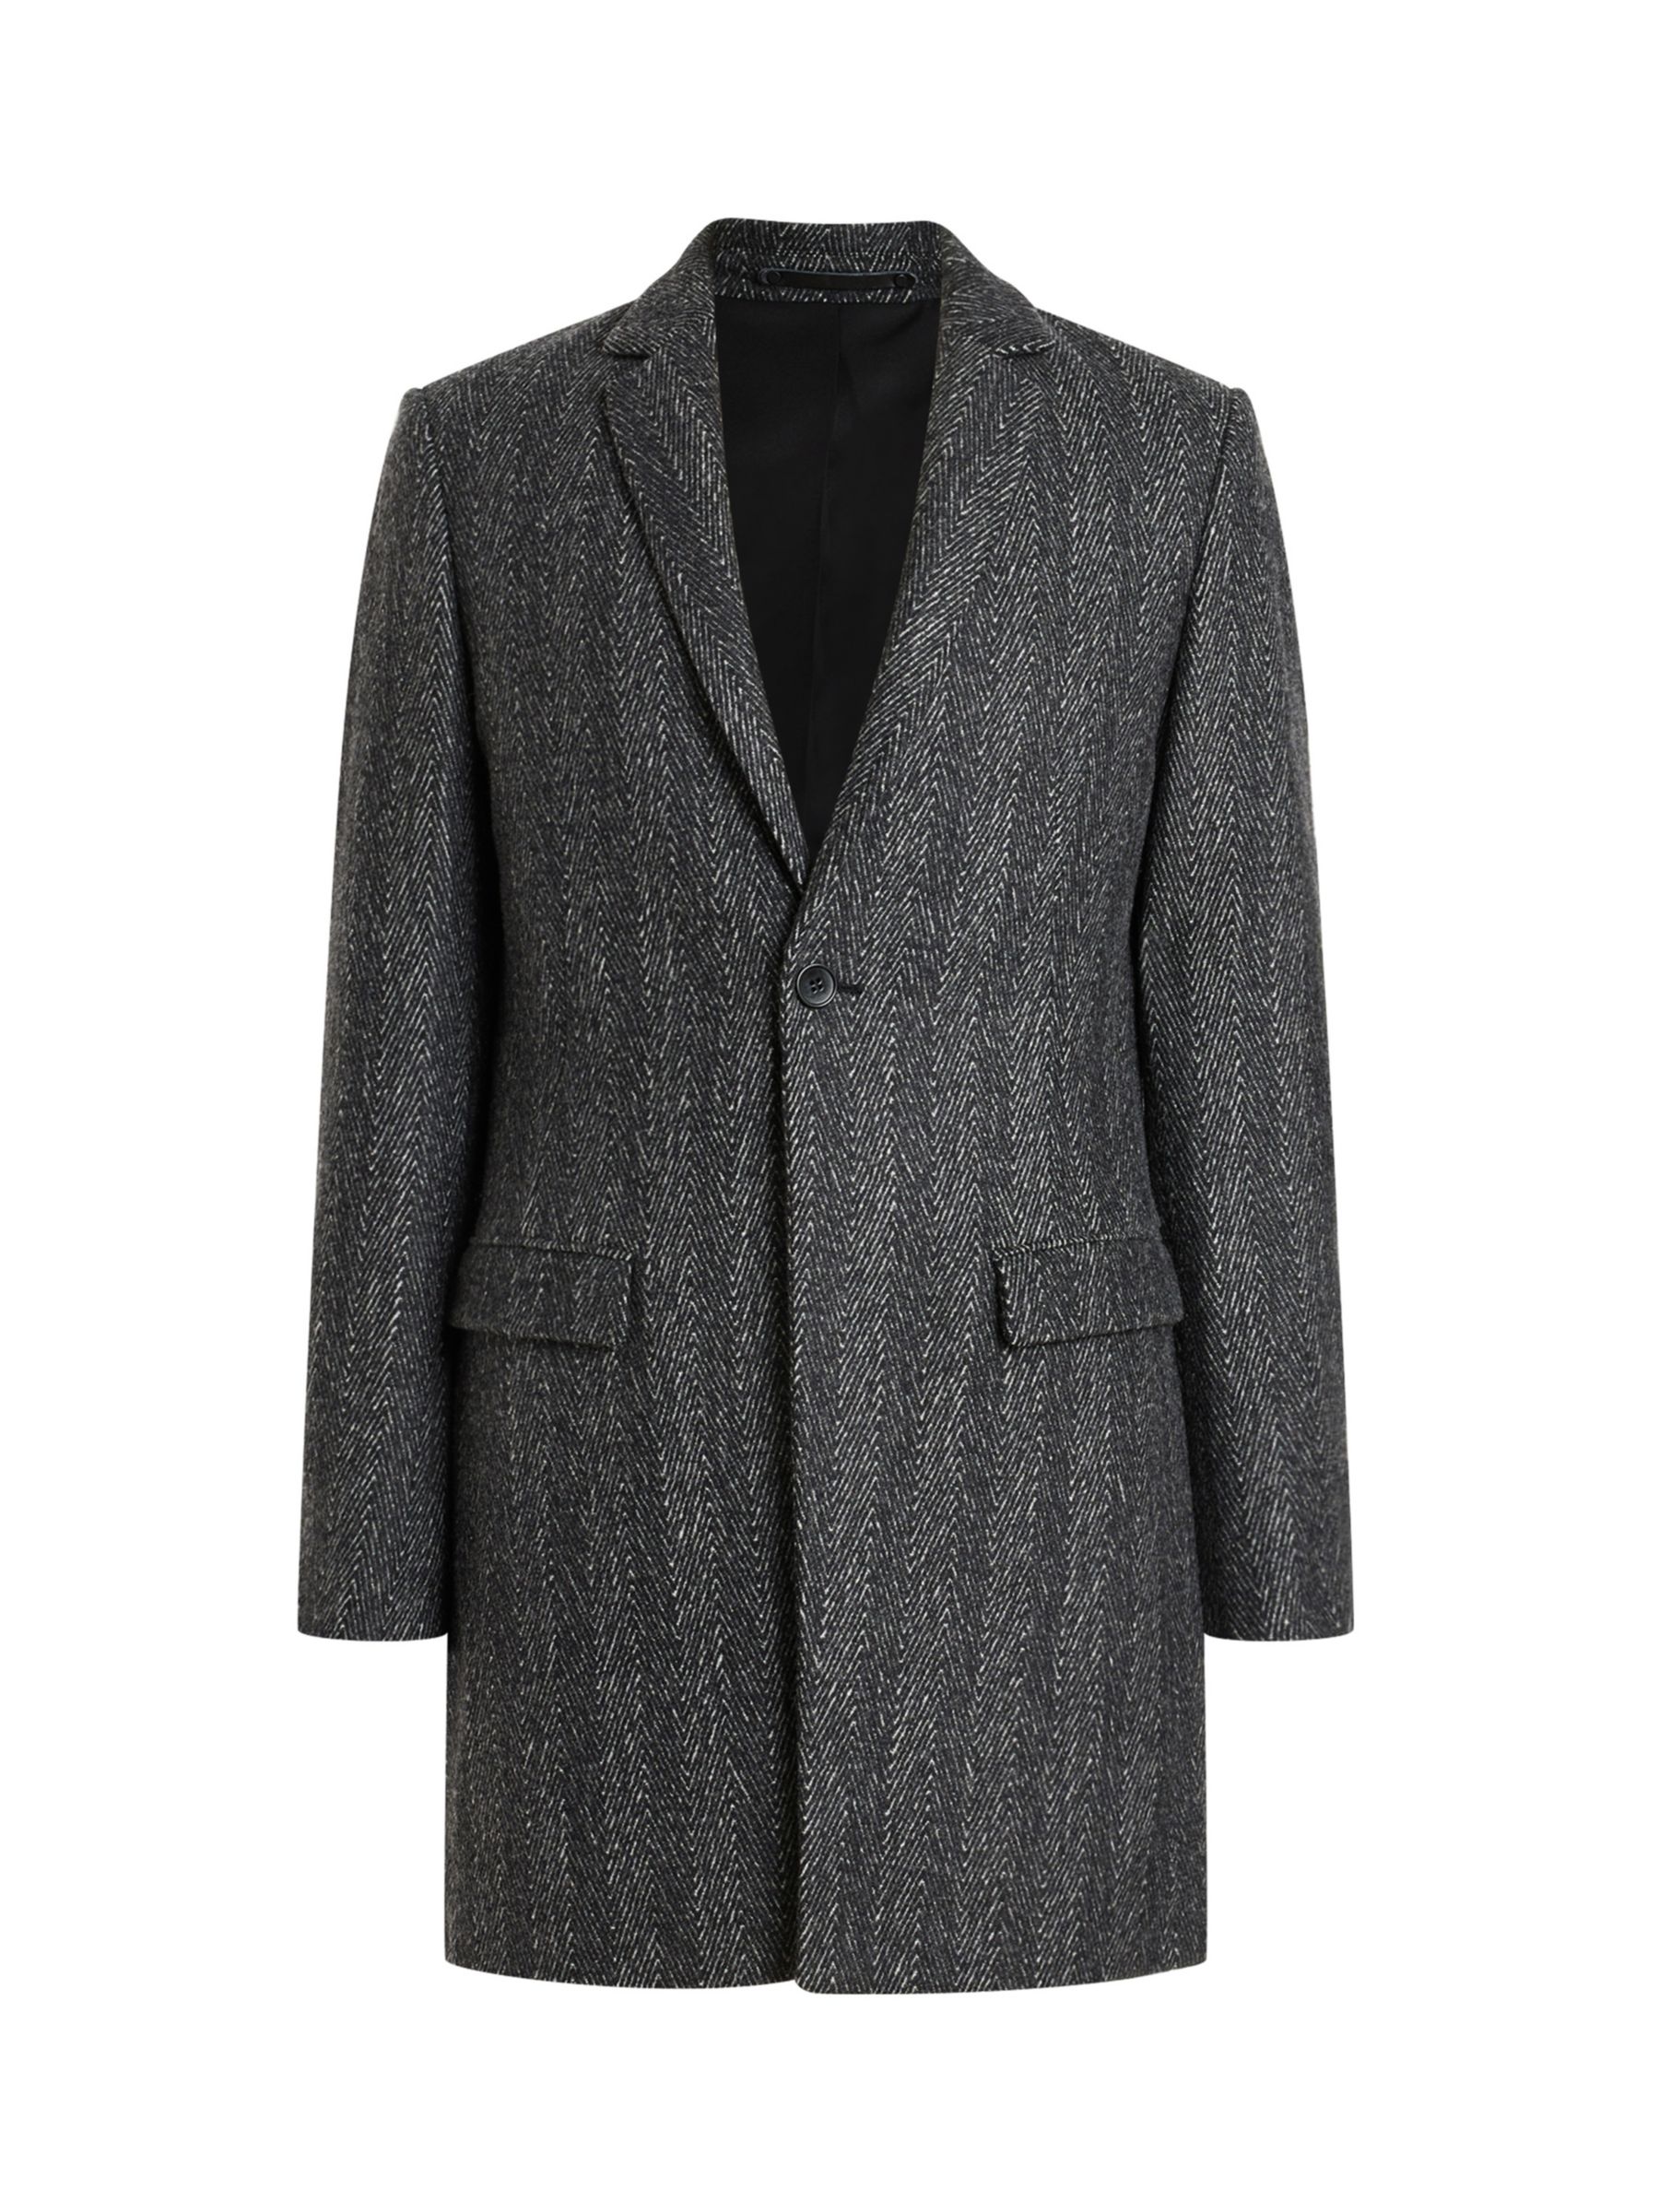 AllSaints Manor Herringbone Wool Coat, Black, 40R